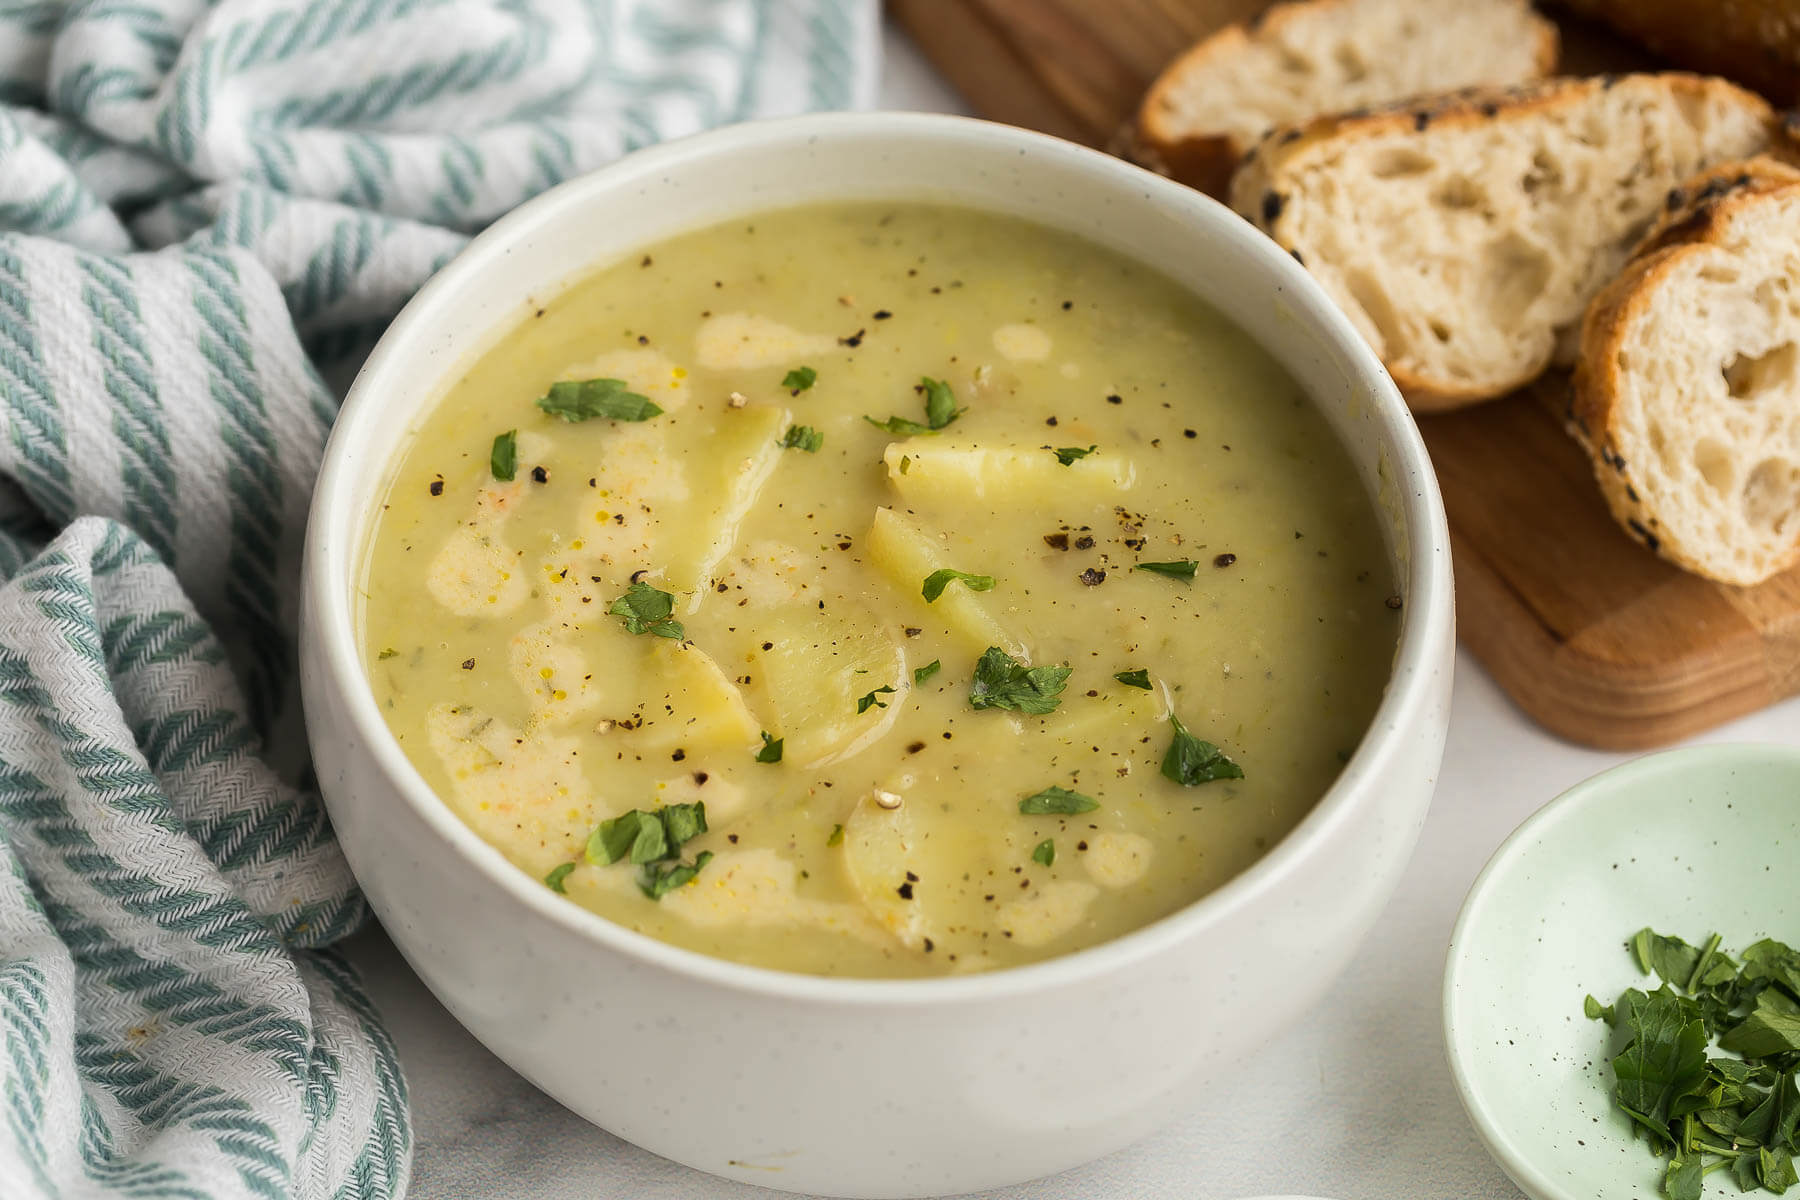 A delicious and comfy bowl of potato leek soup.